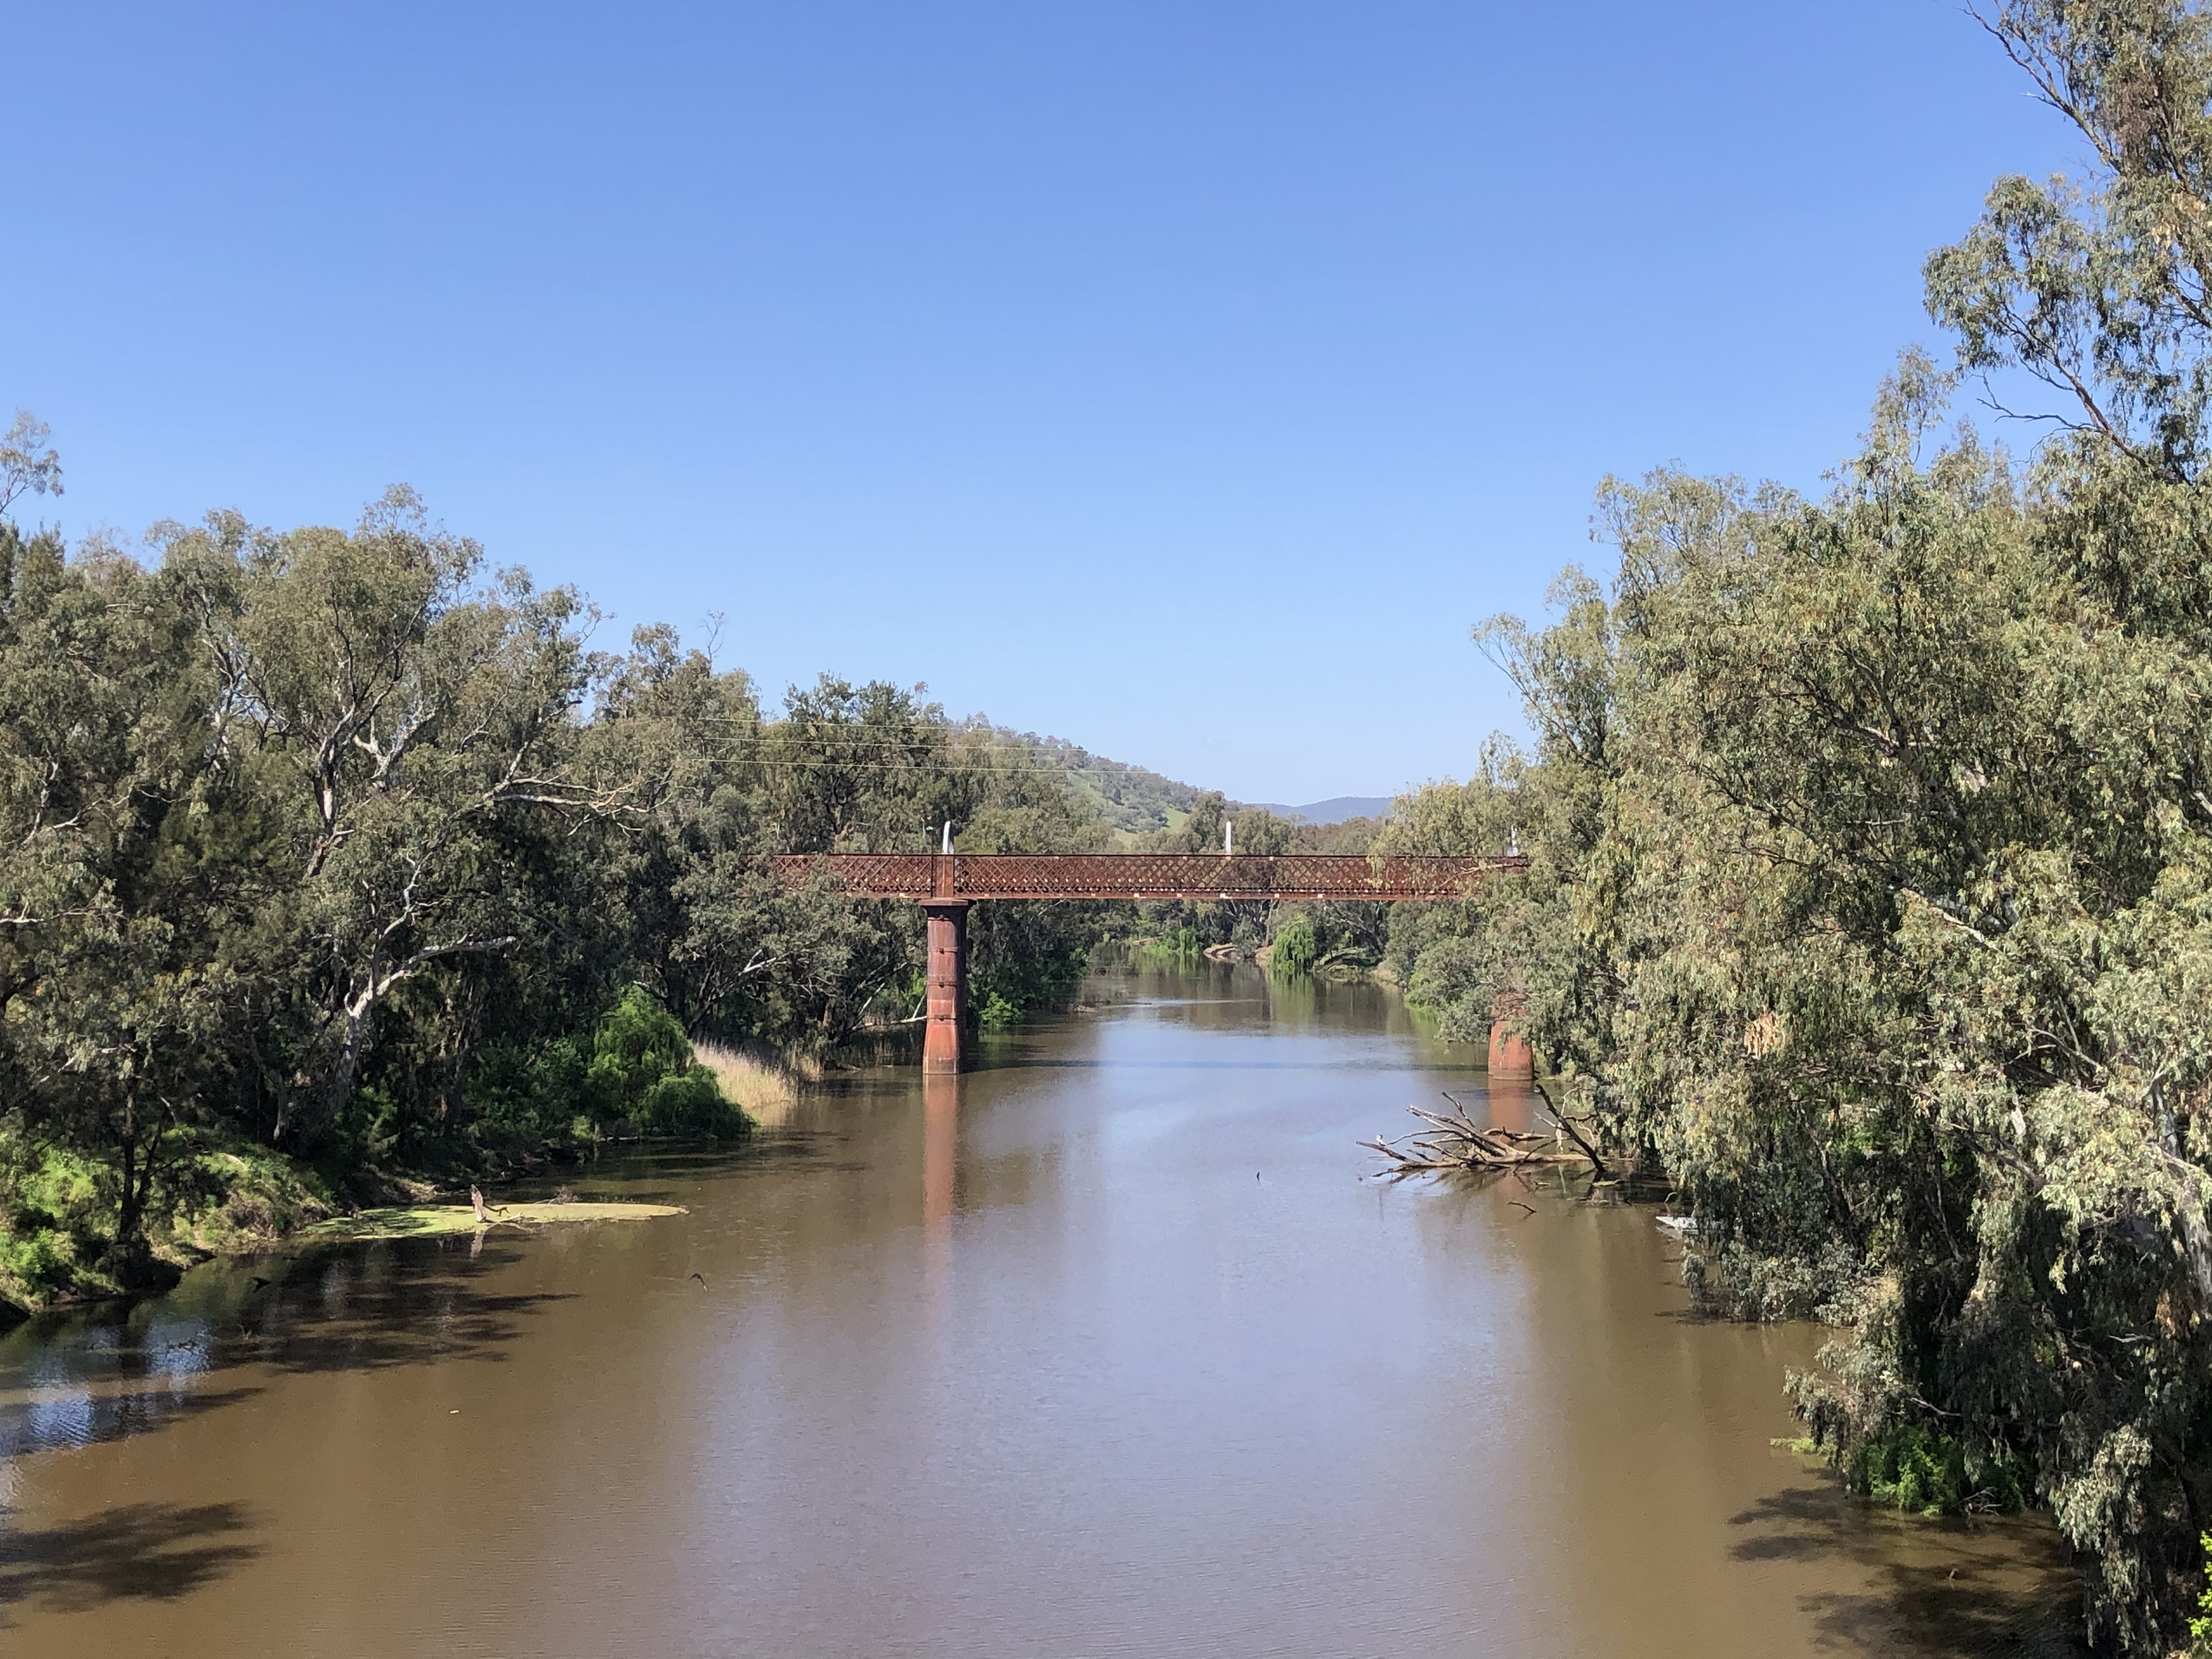 The Wambuul Macquarie river